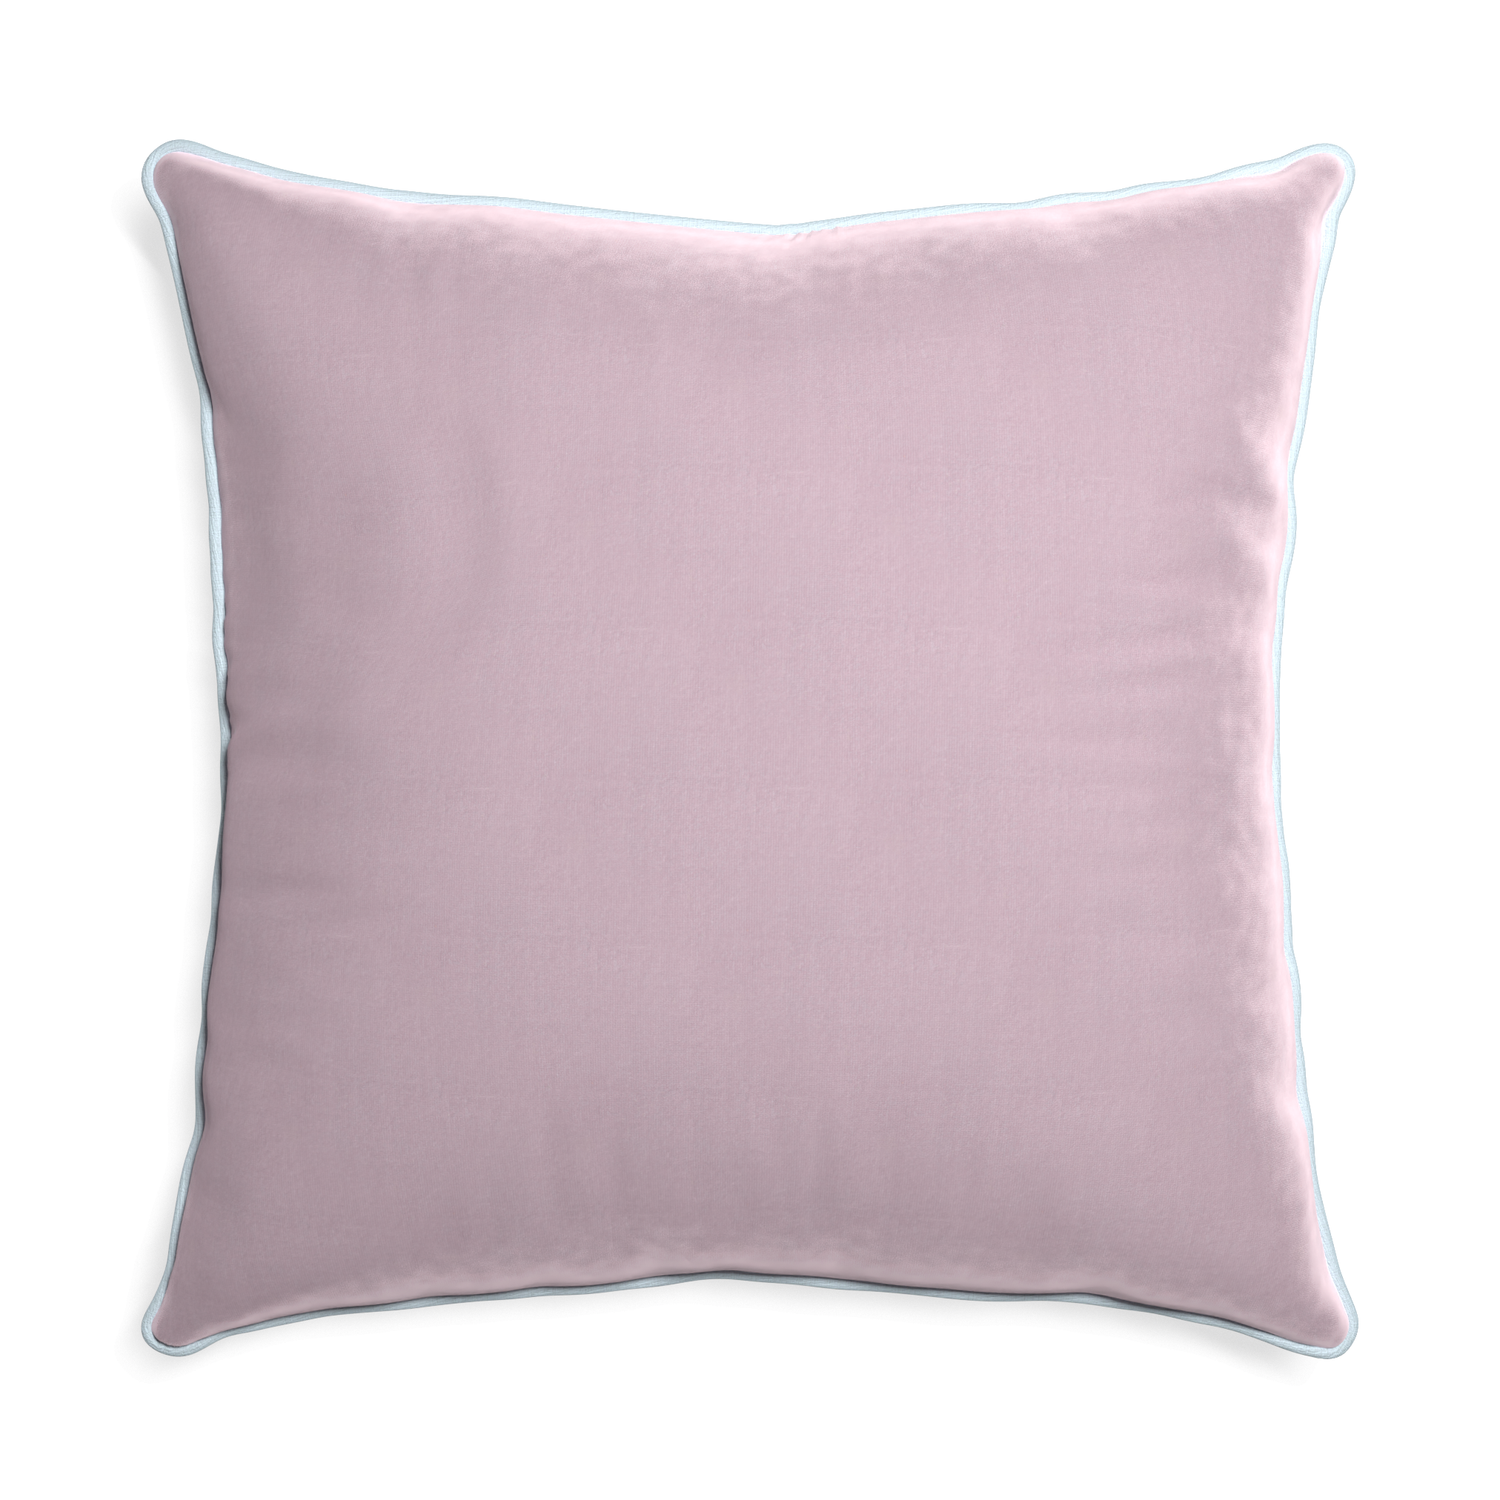 Euro-sham lilac velvet custom pillow with powder piping on white background